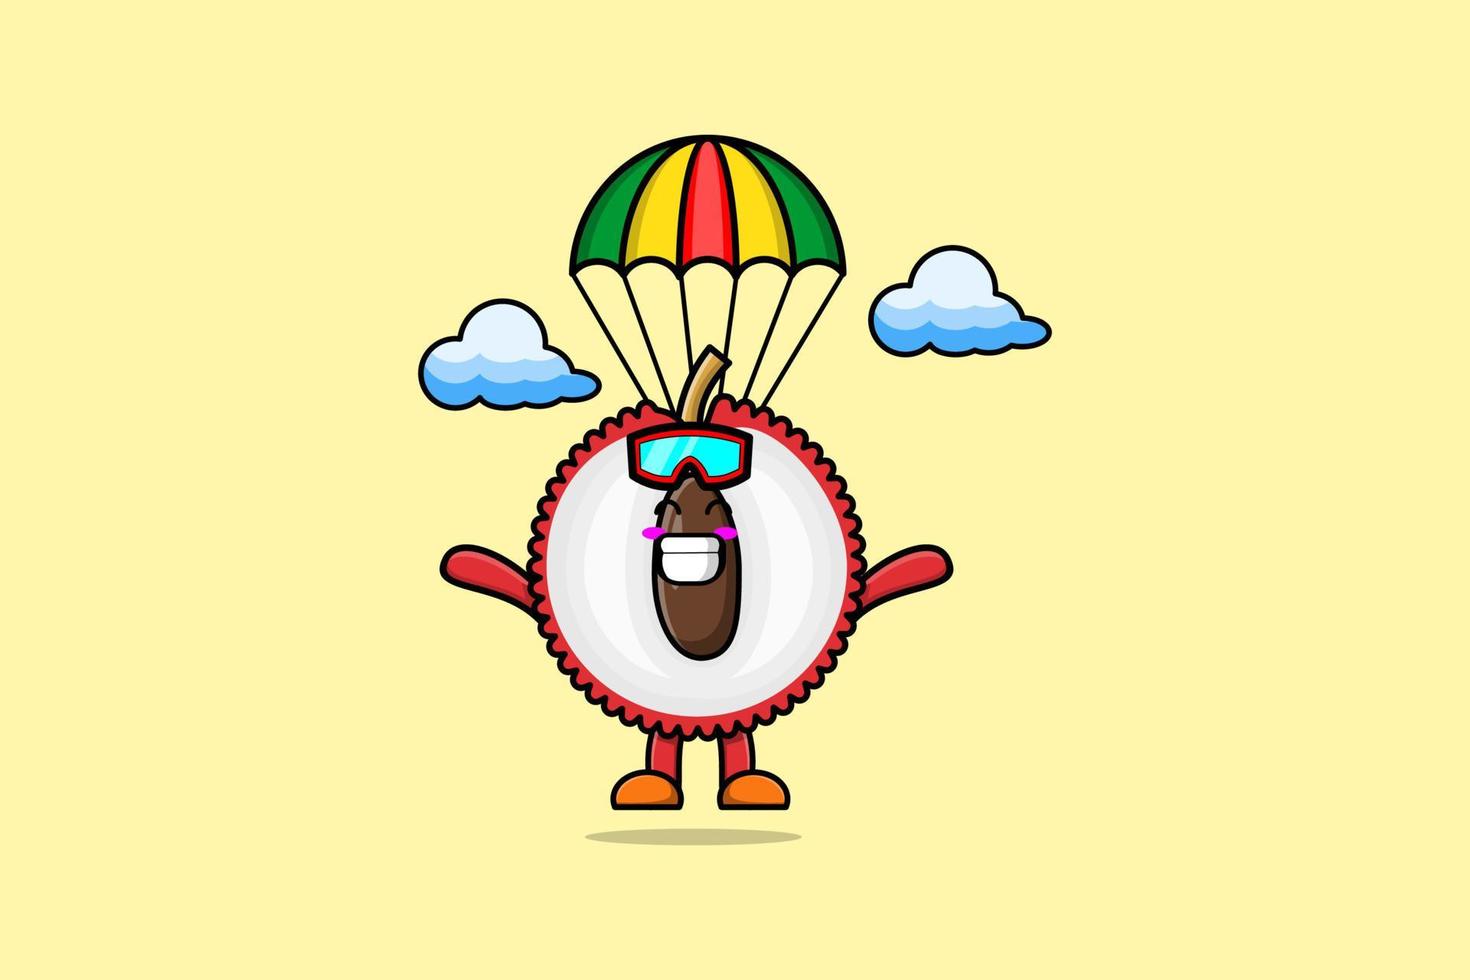 portafortuna cartone animato lychee è paracadutismo con paracadute vettore